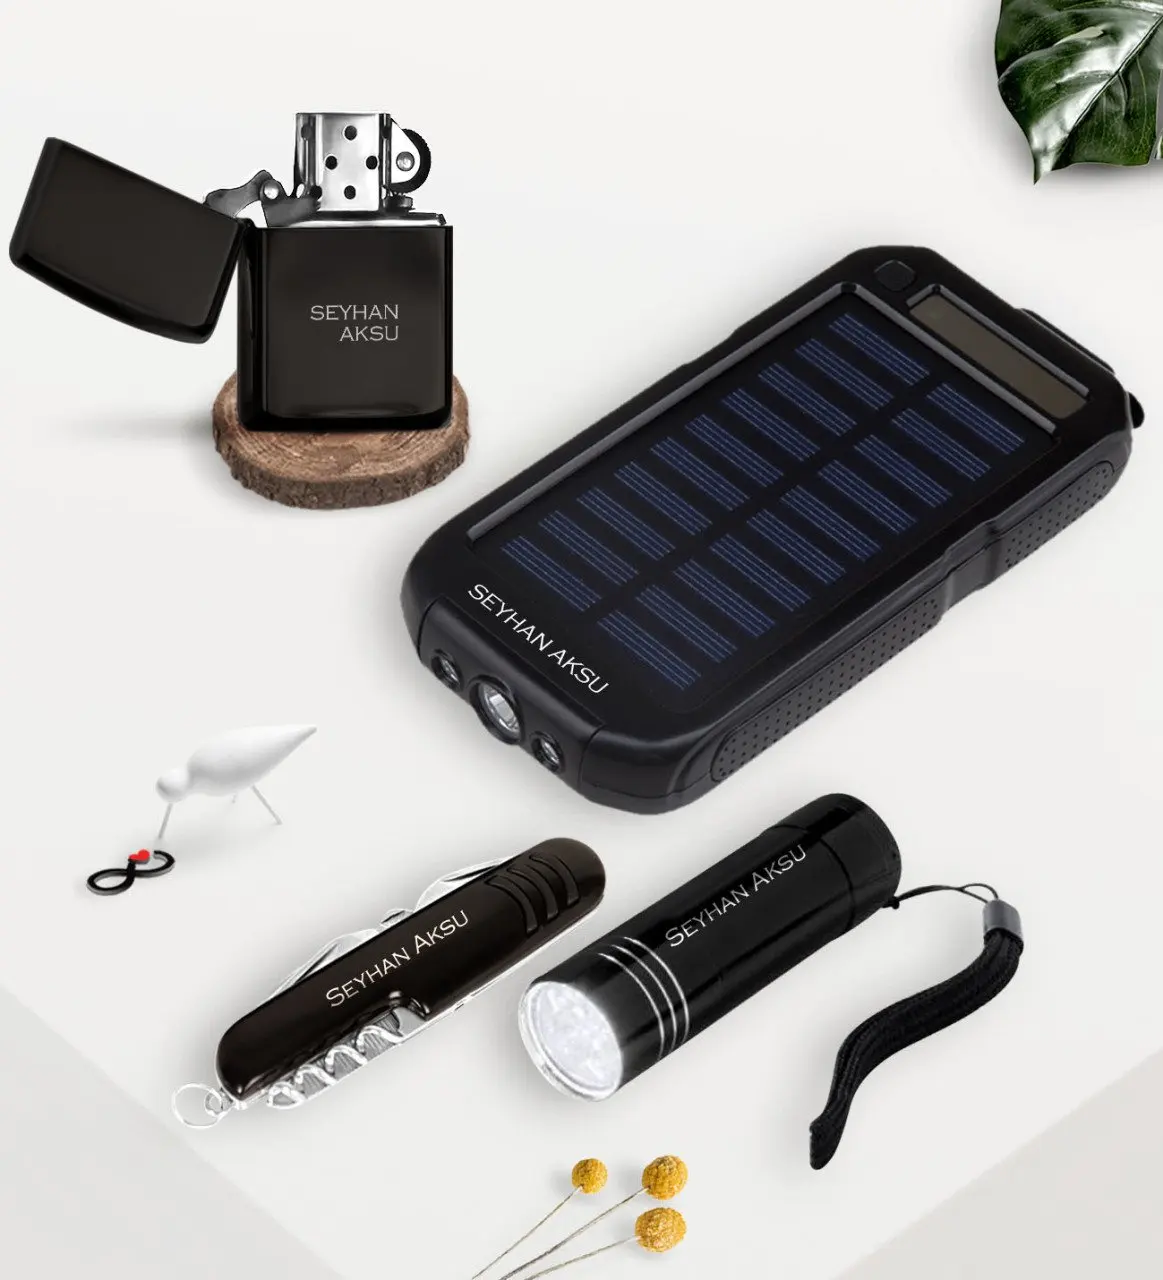 

2022.Personalized 10000 mAh Solar Powerbank Flashlight Pocketknife Lighter Gift Set